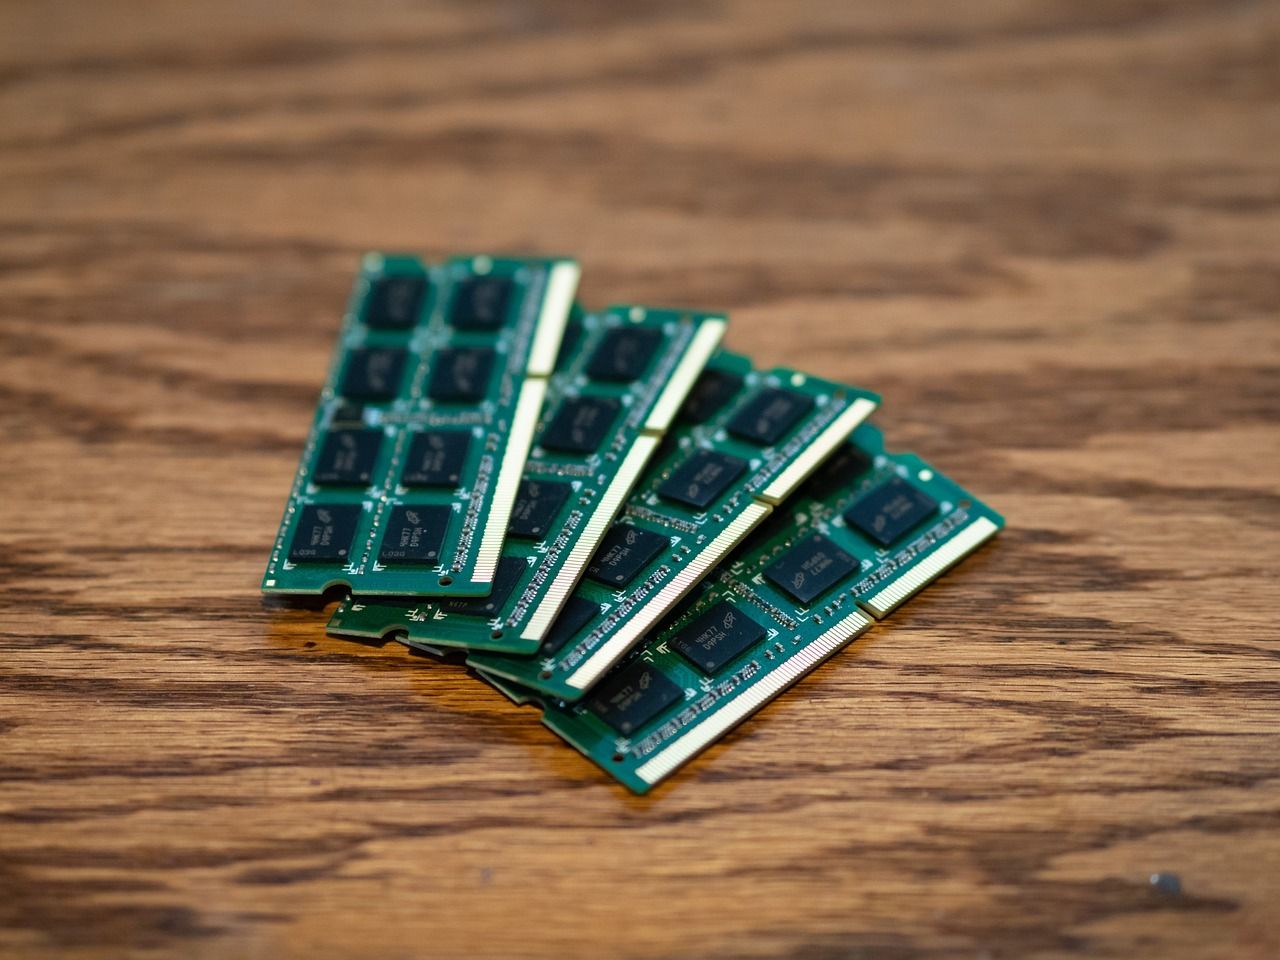 Several sticks of RAM